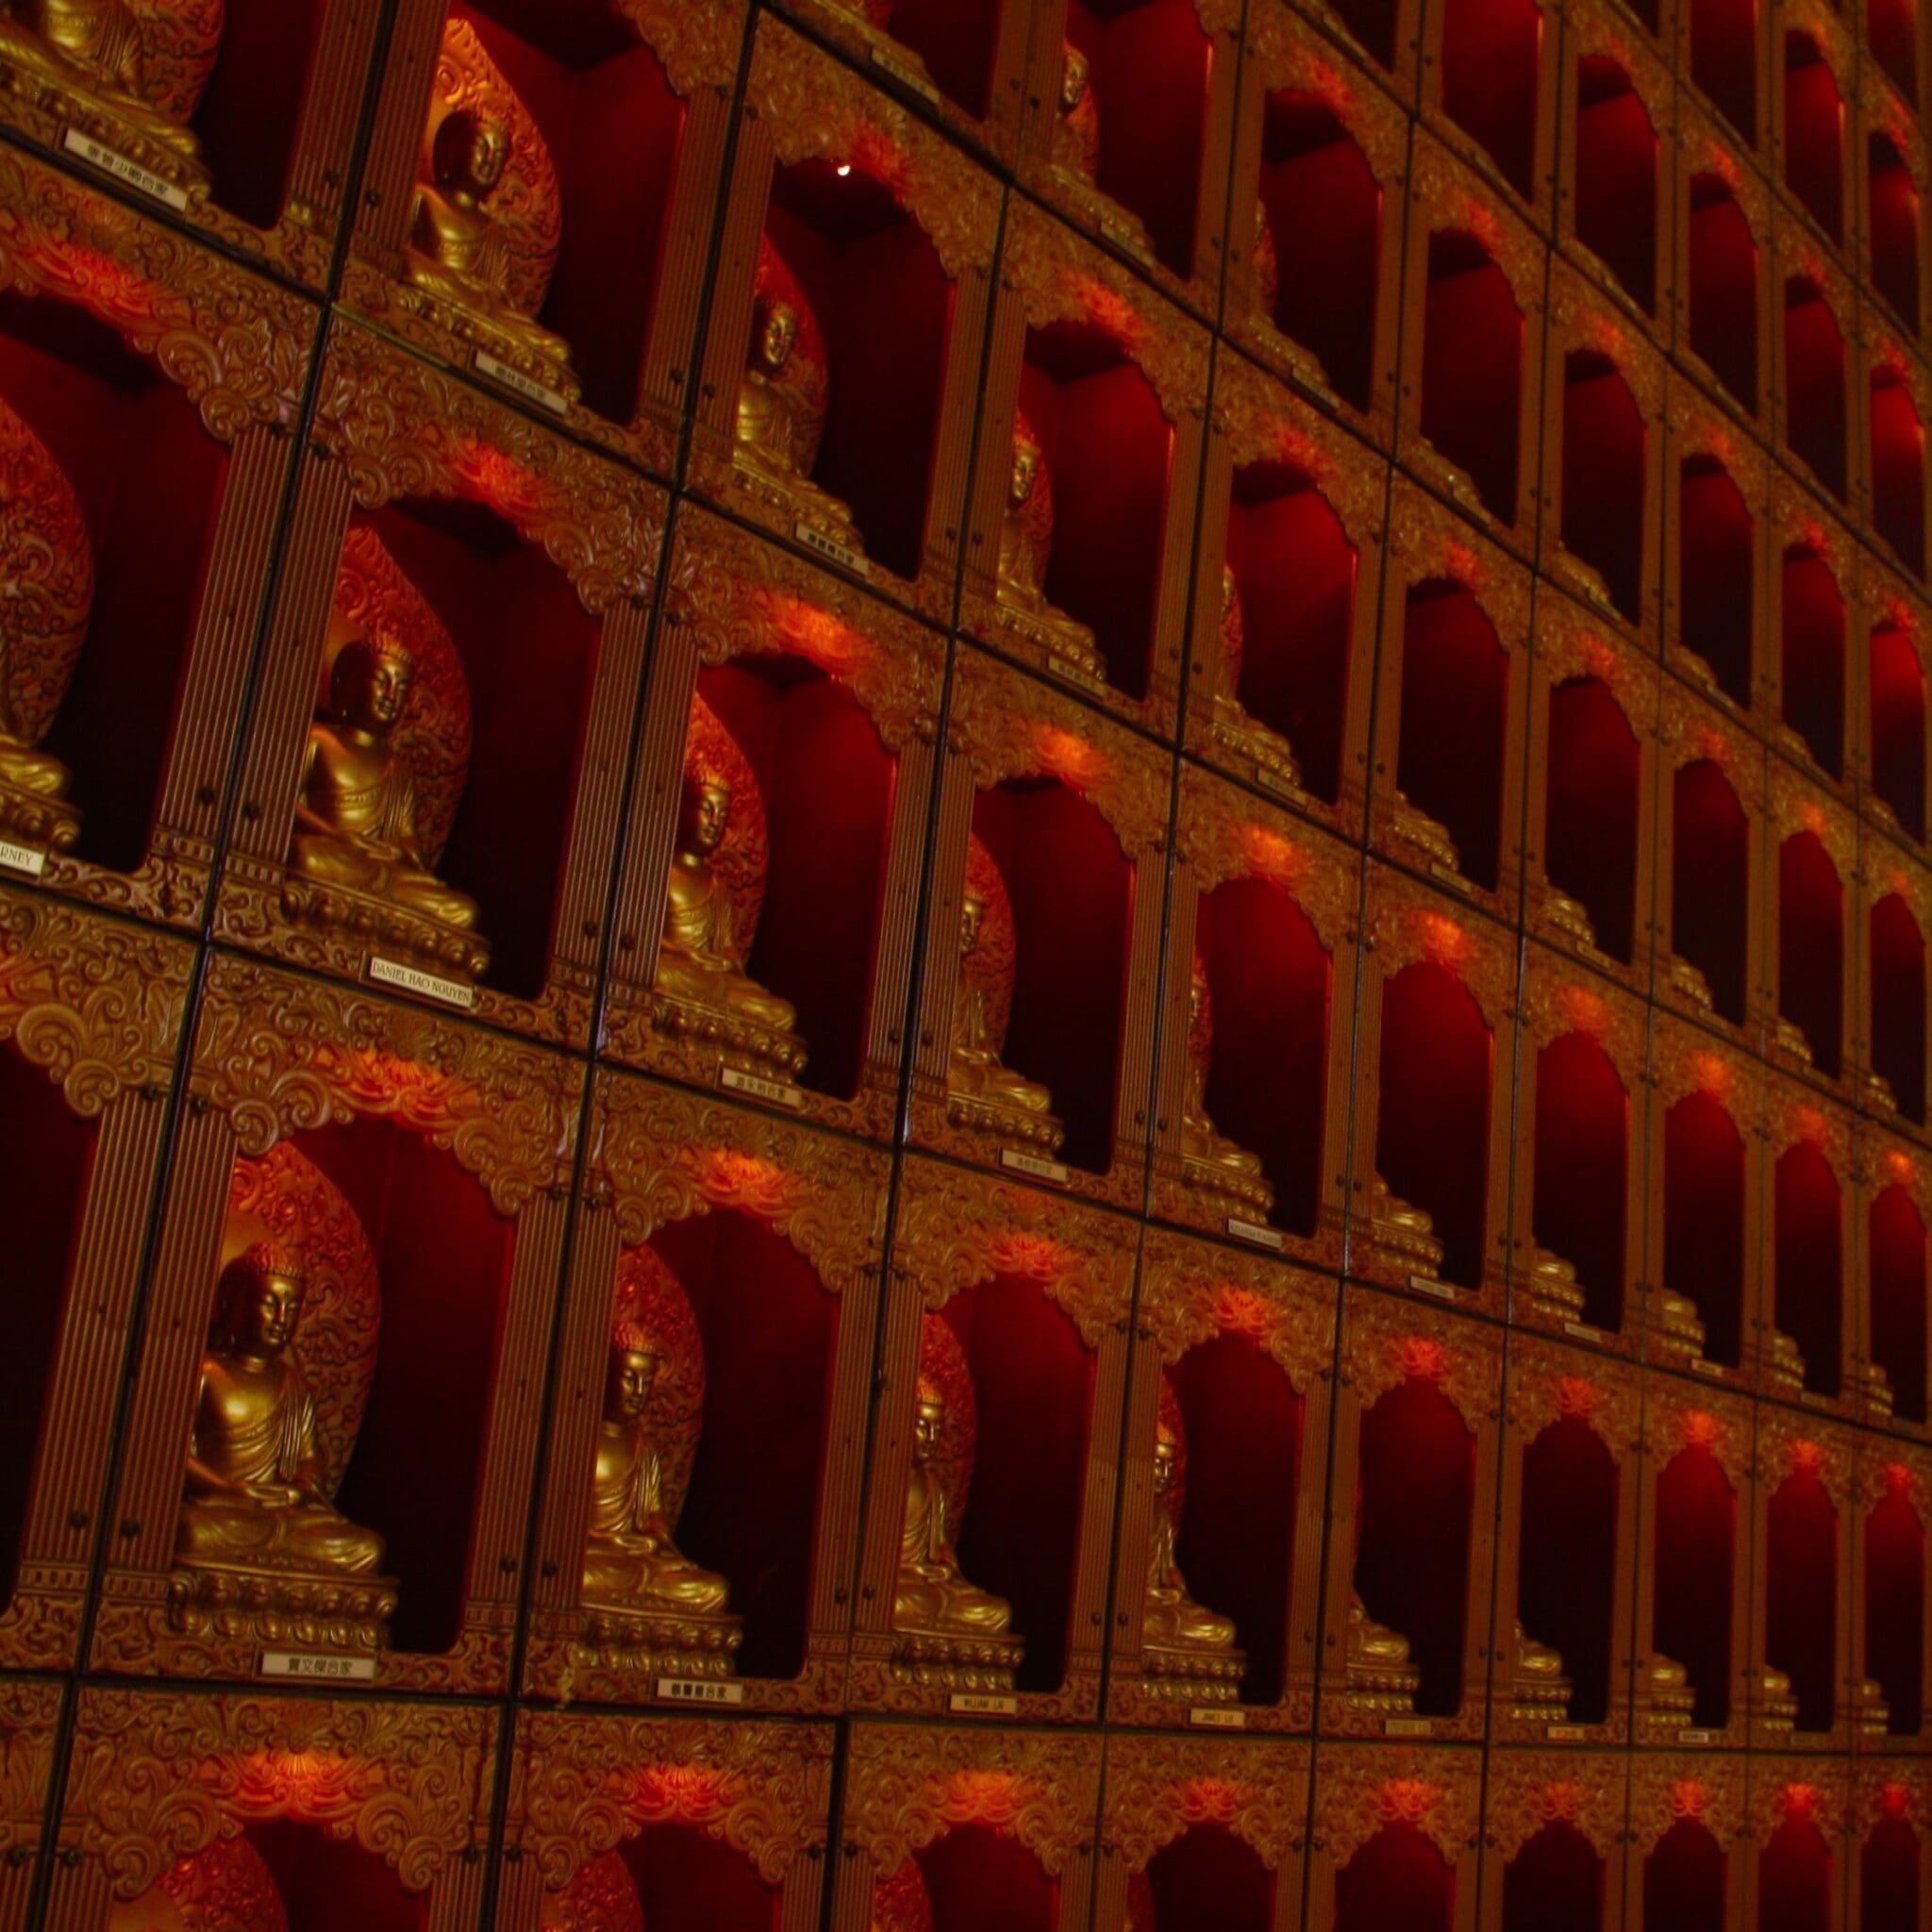 Wall of Buddhas